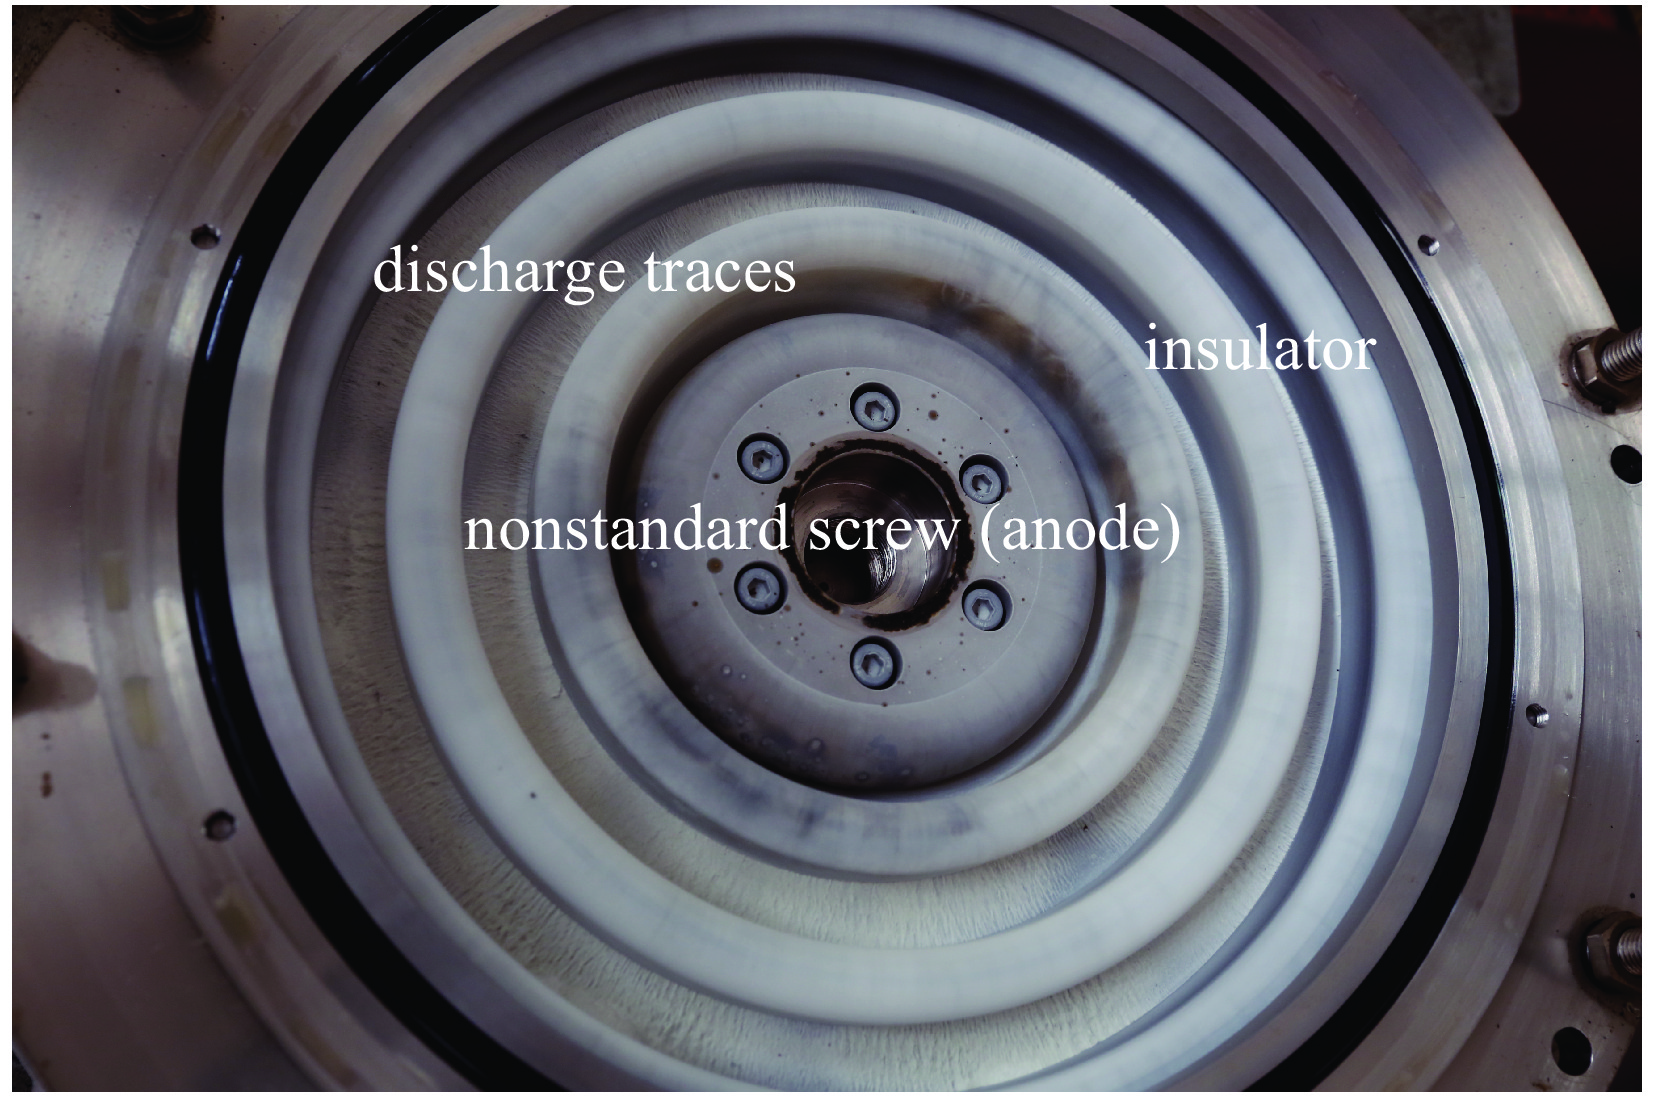 Insulator and nonstandard screw (anode)